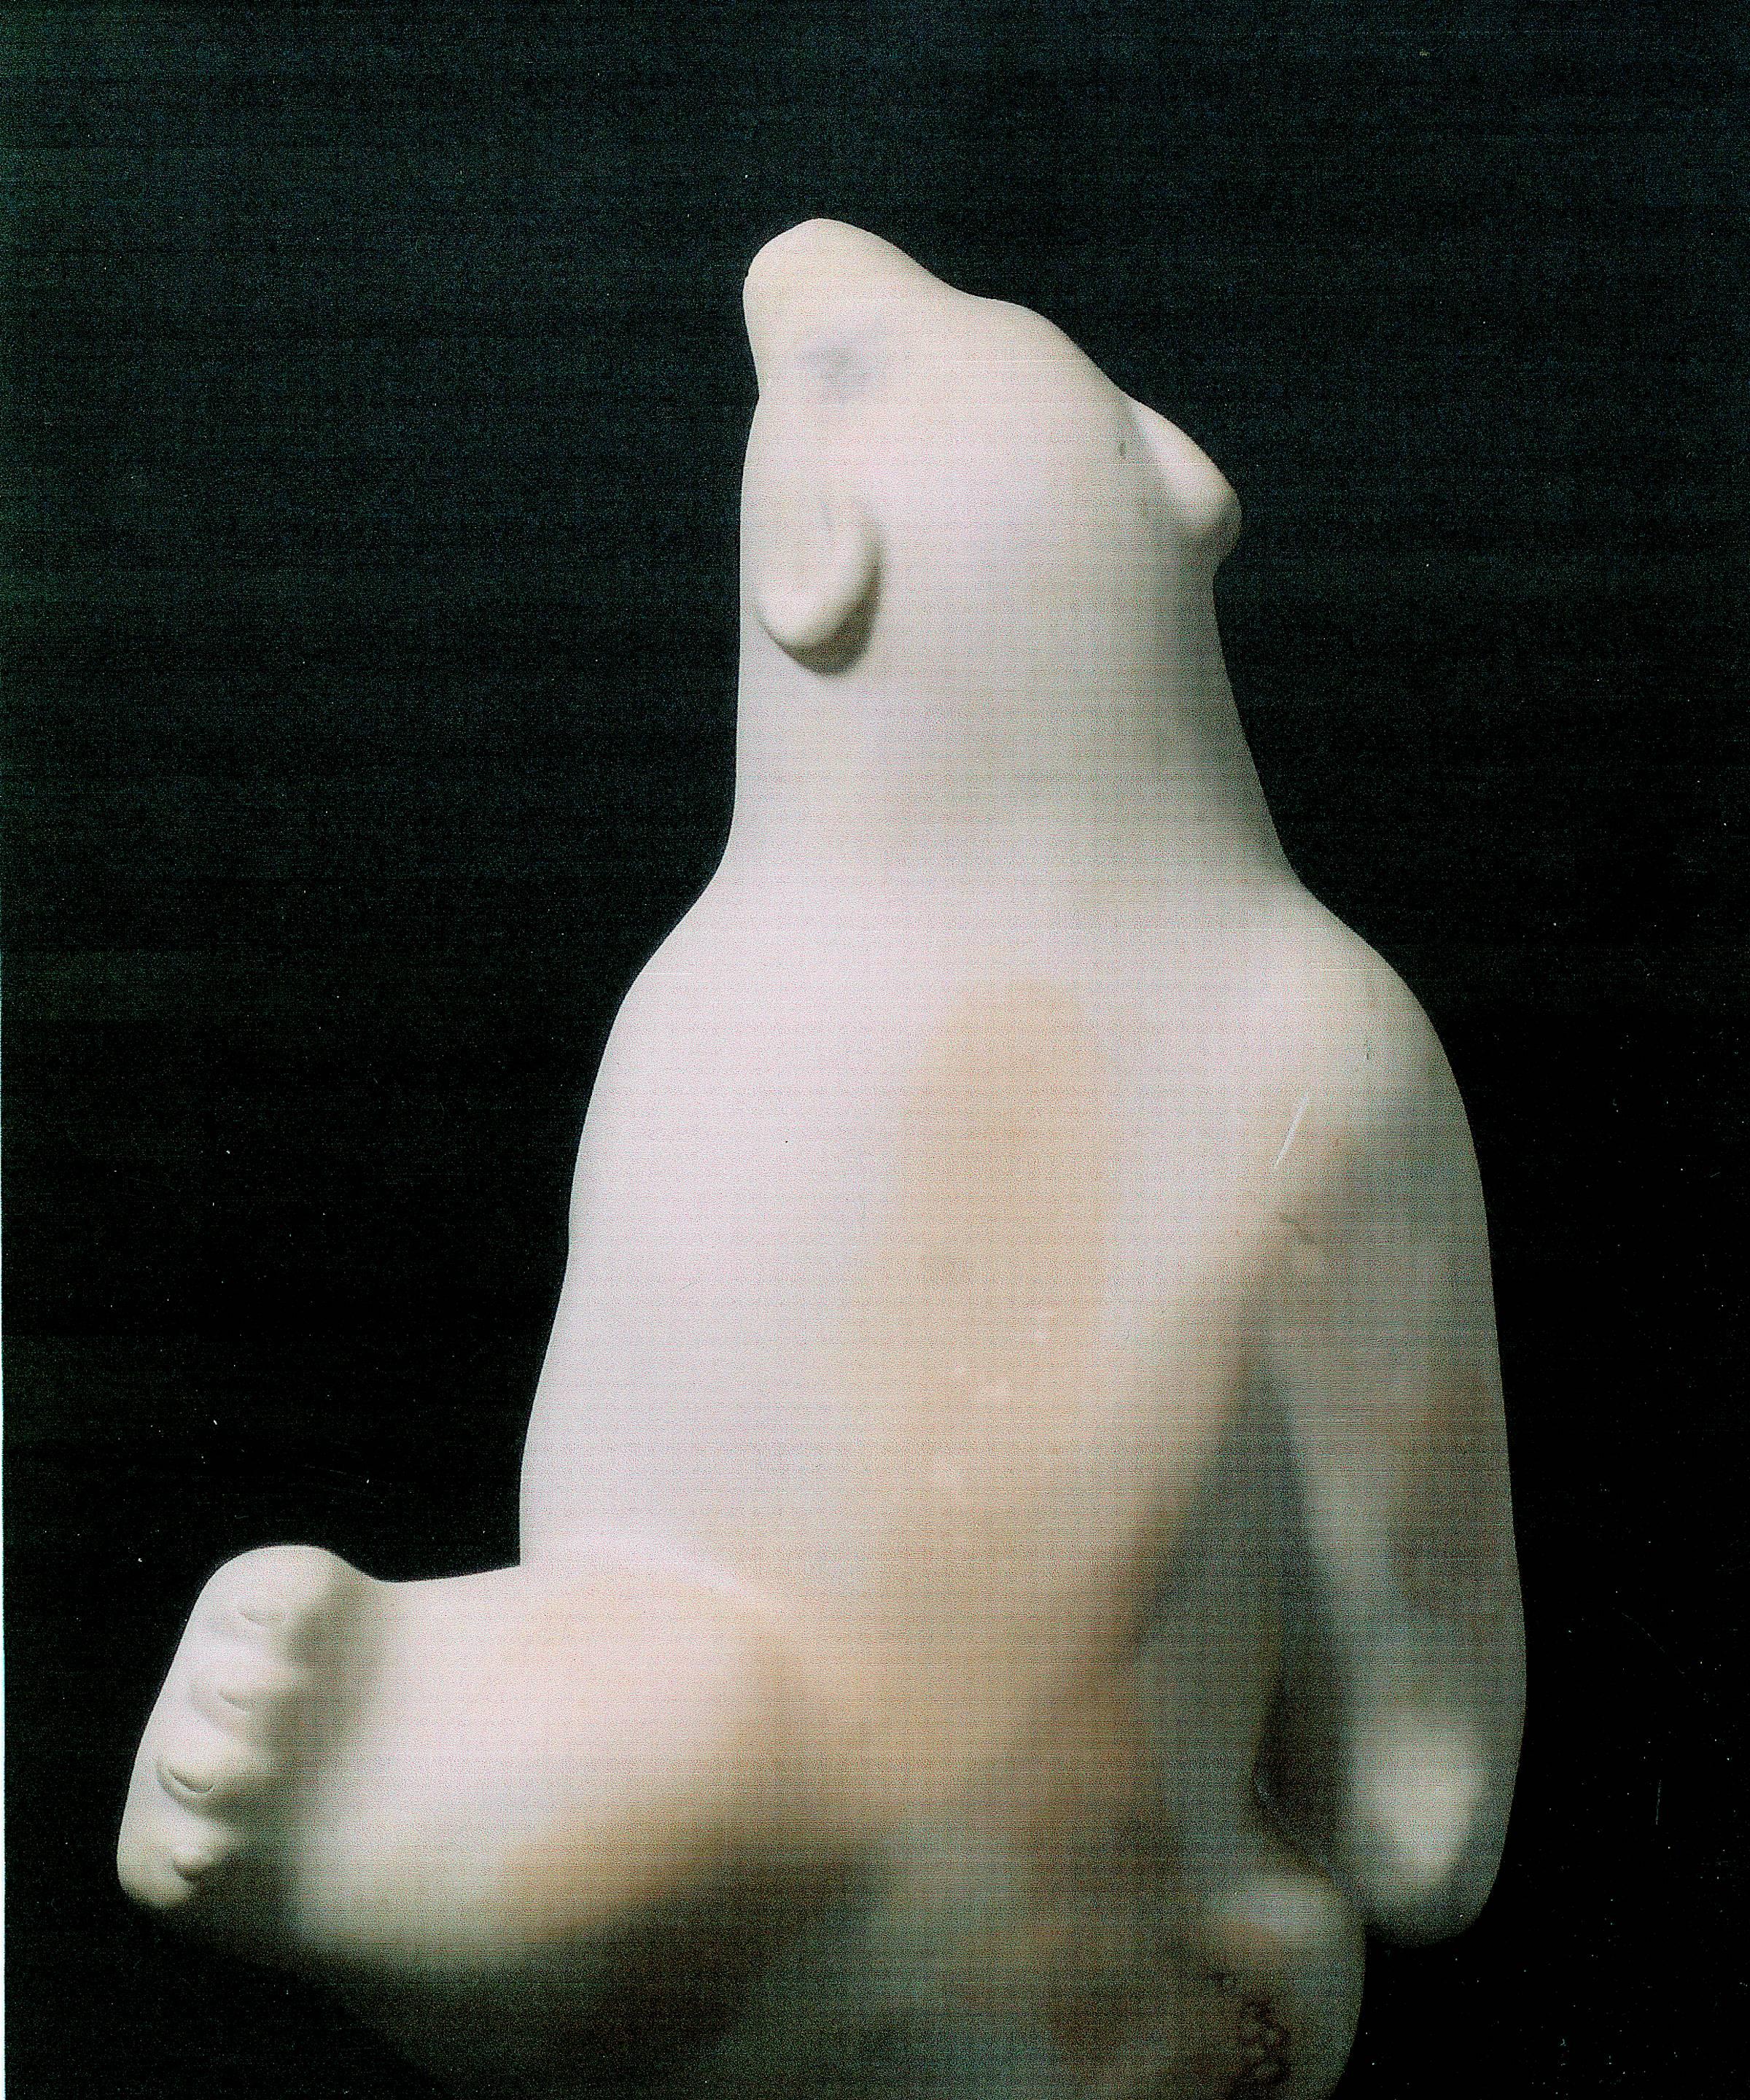 Polar Bear, white stone sculpture - Sculpture by Lukta Qiatsuk